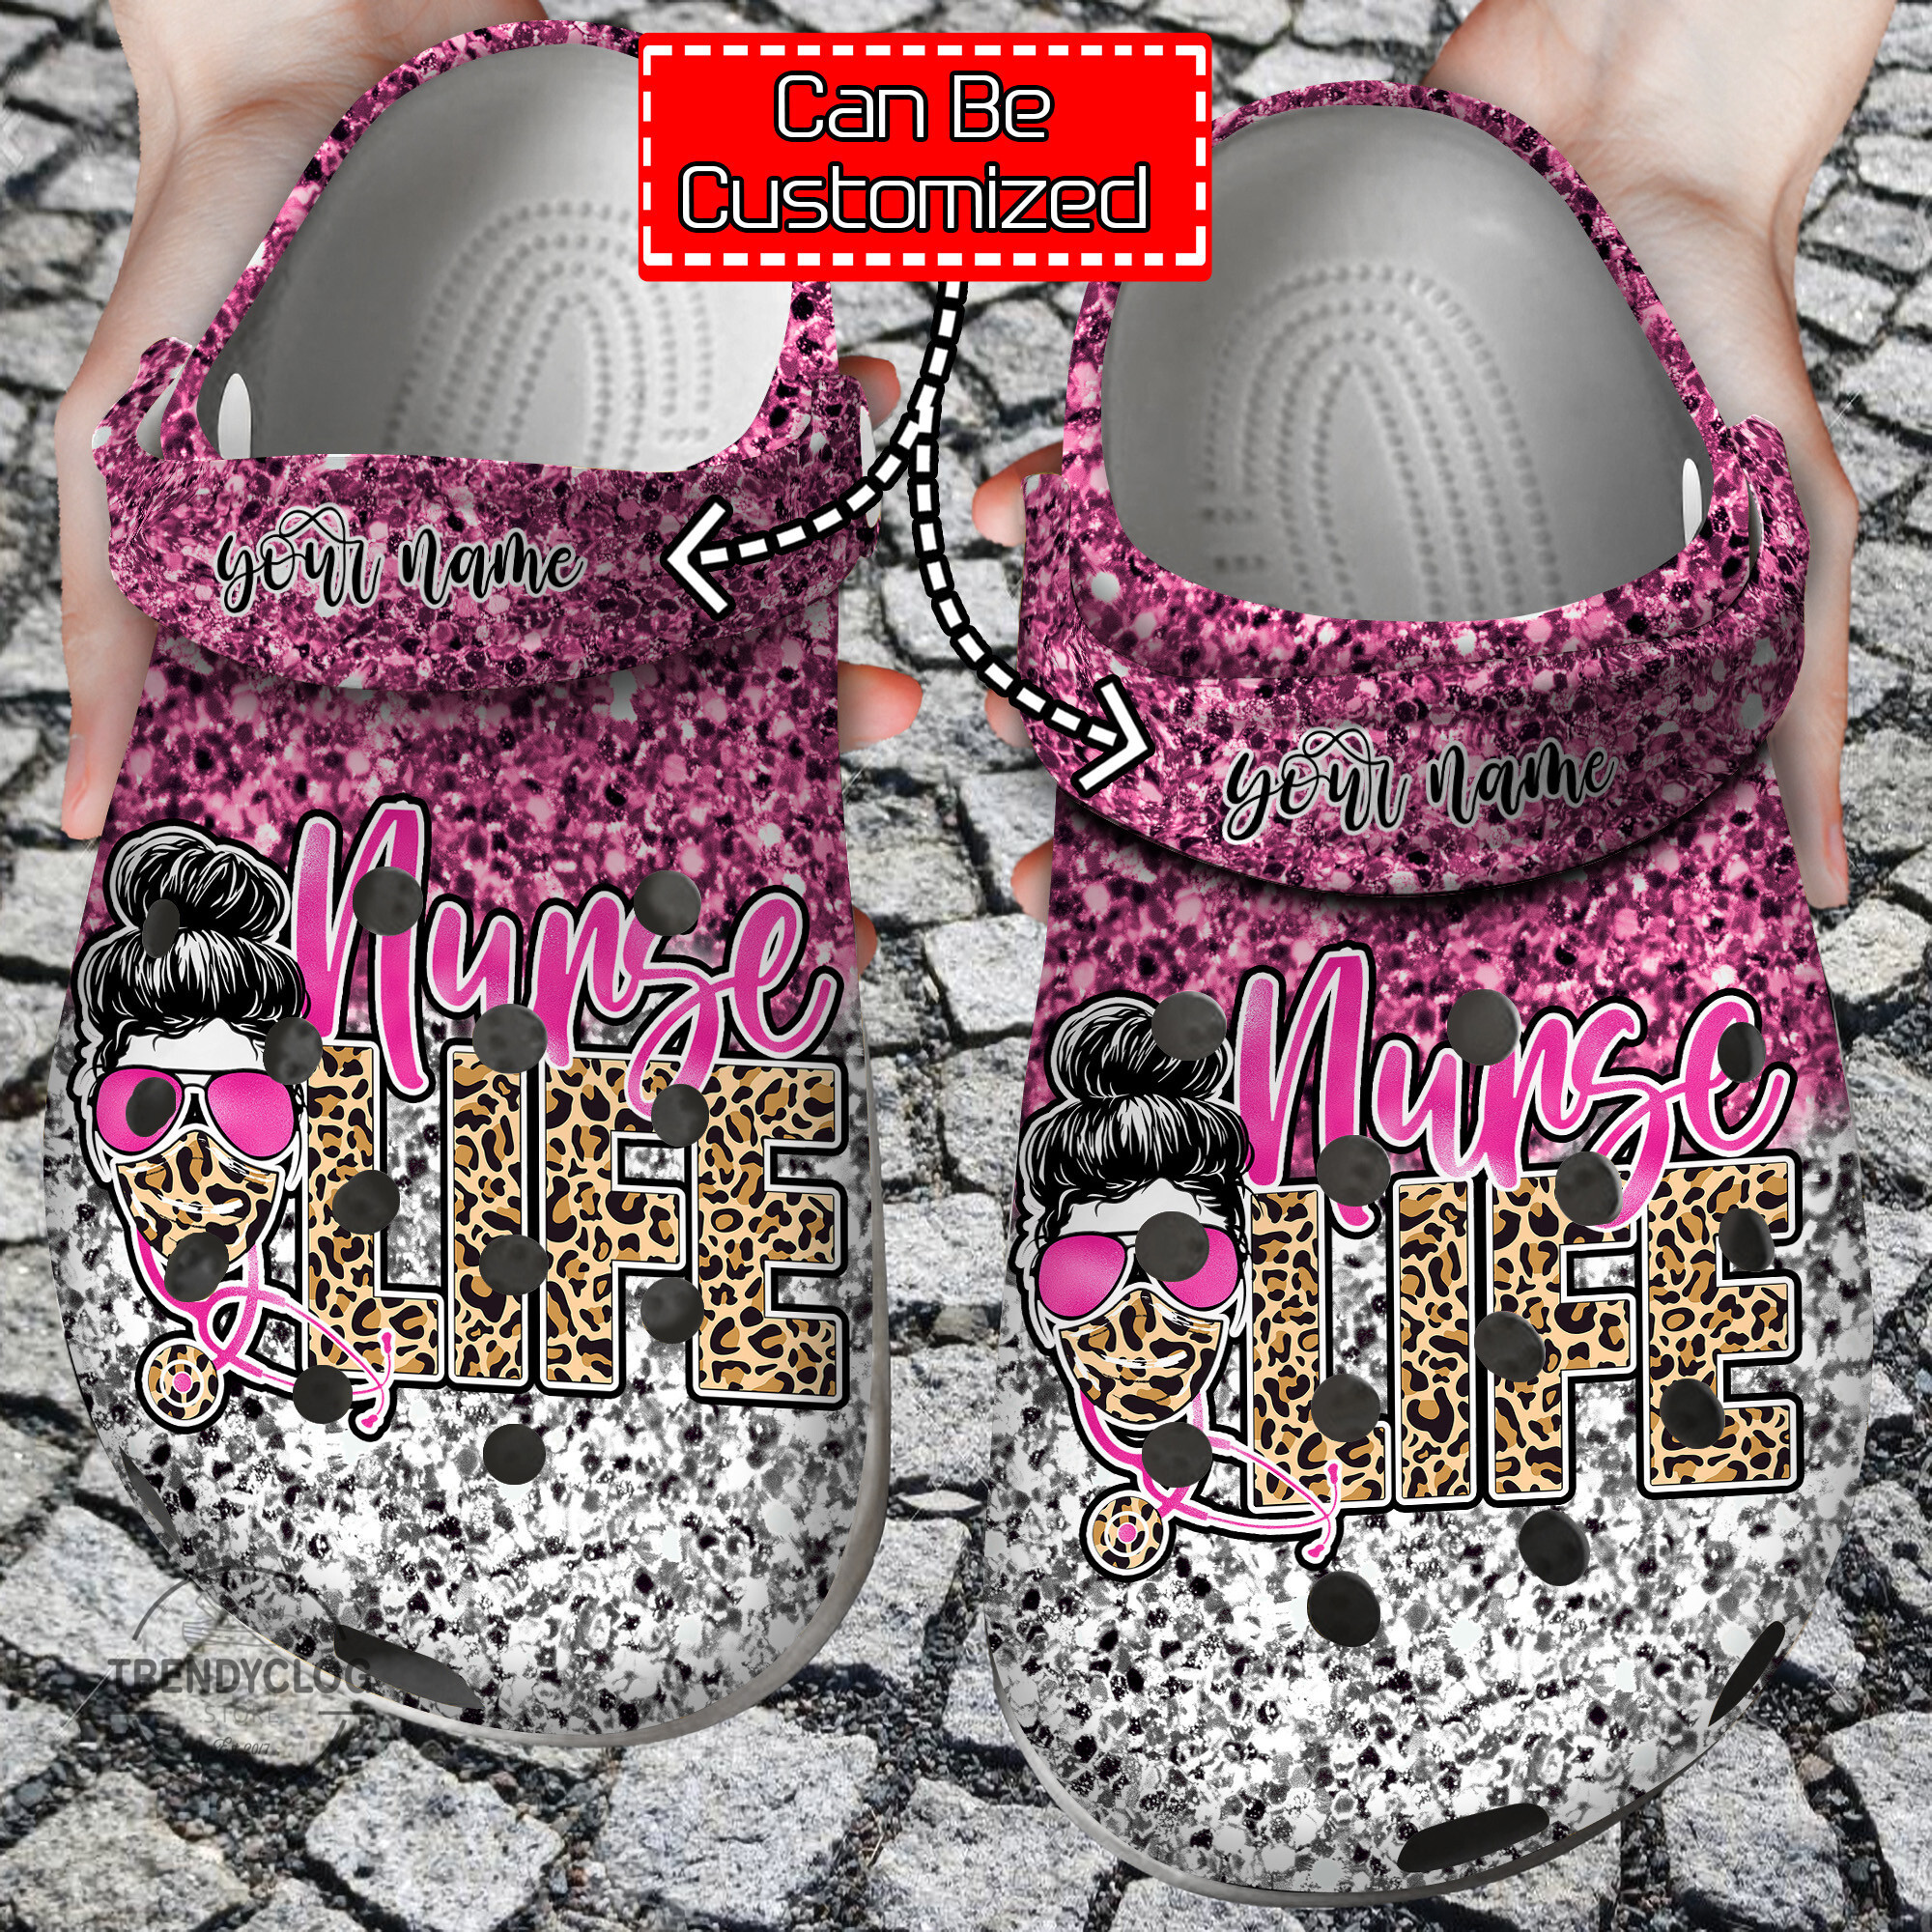 Nurse Crocs Personalized Nurse Life Face Leopard Gliiter Clog Shoes